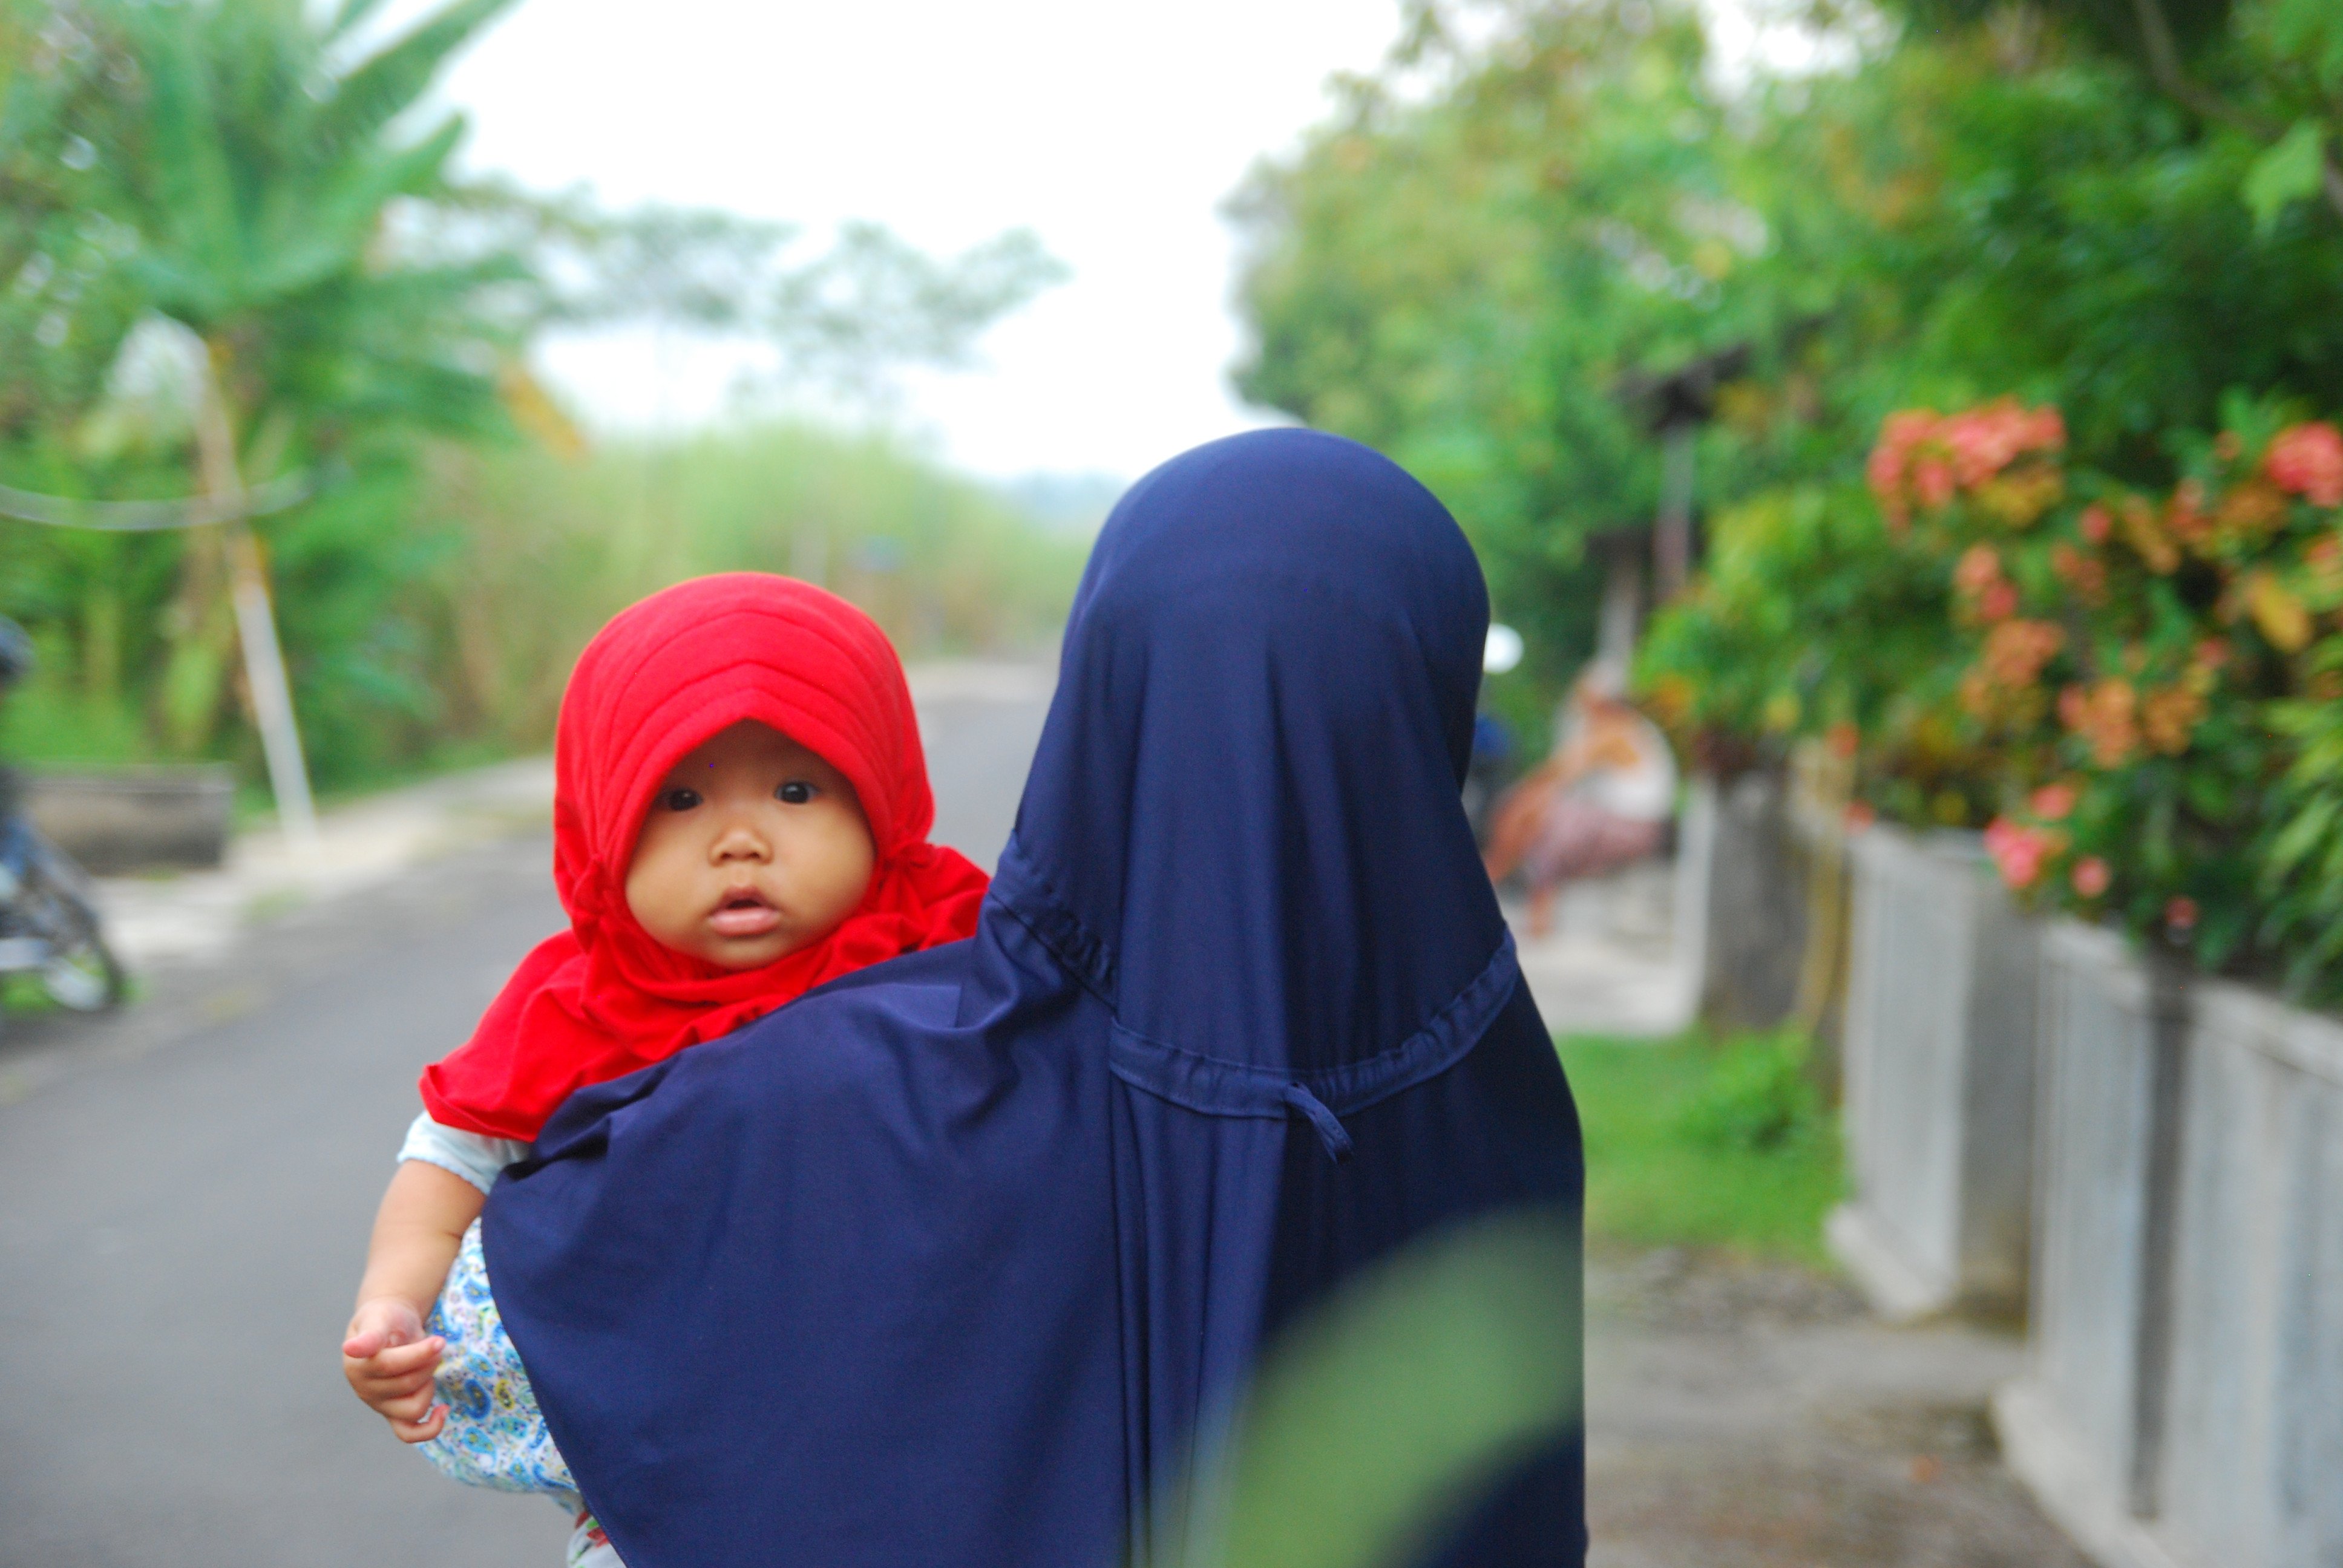 A woman carries her baby in Yogyakarta, Indonesia. Photo: Shutterstock 